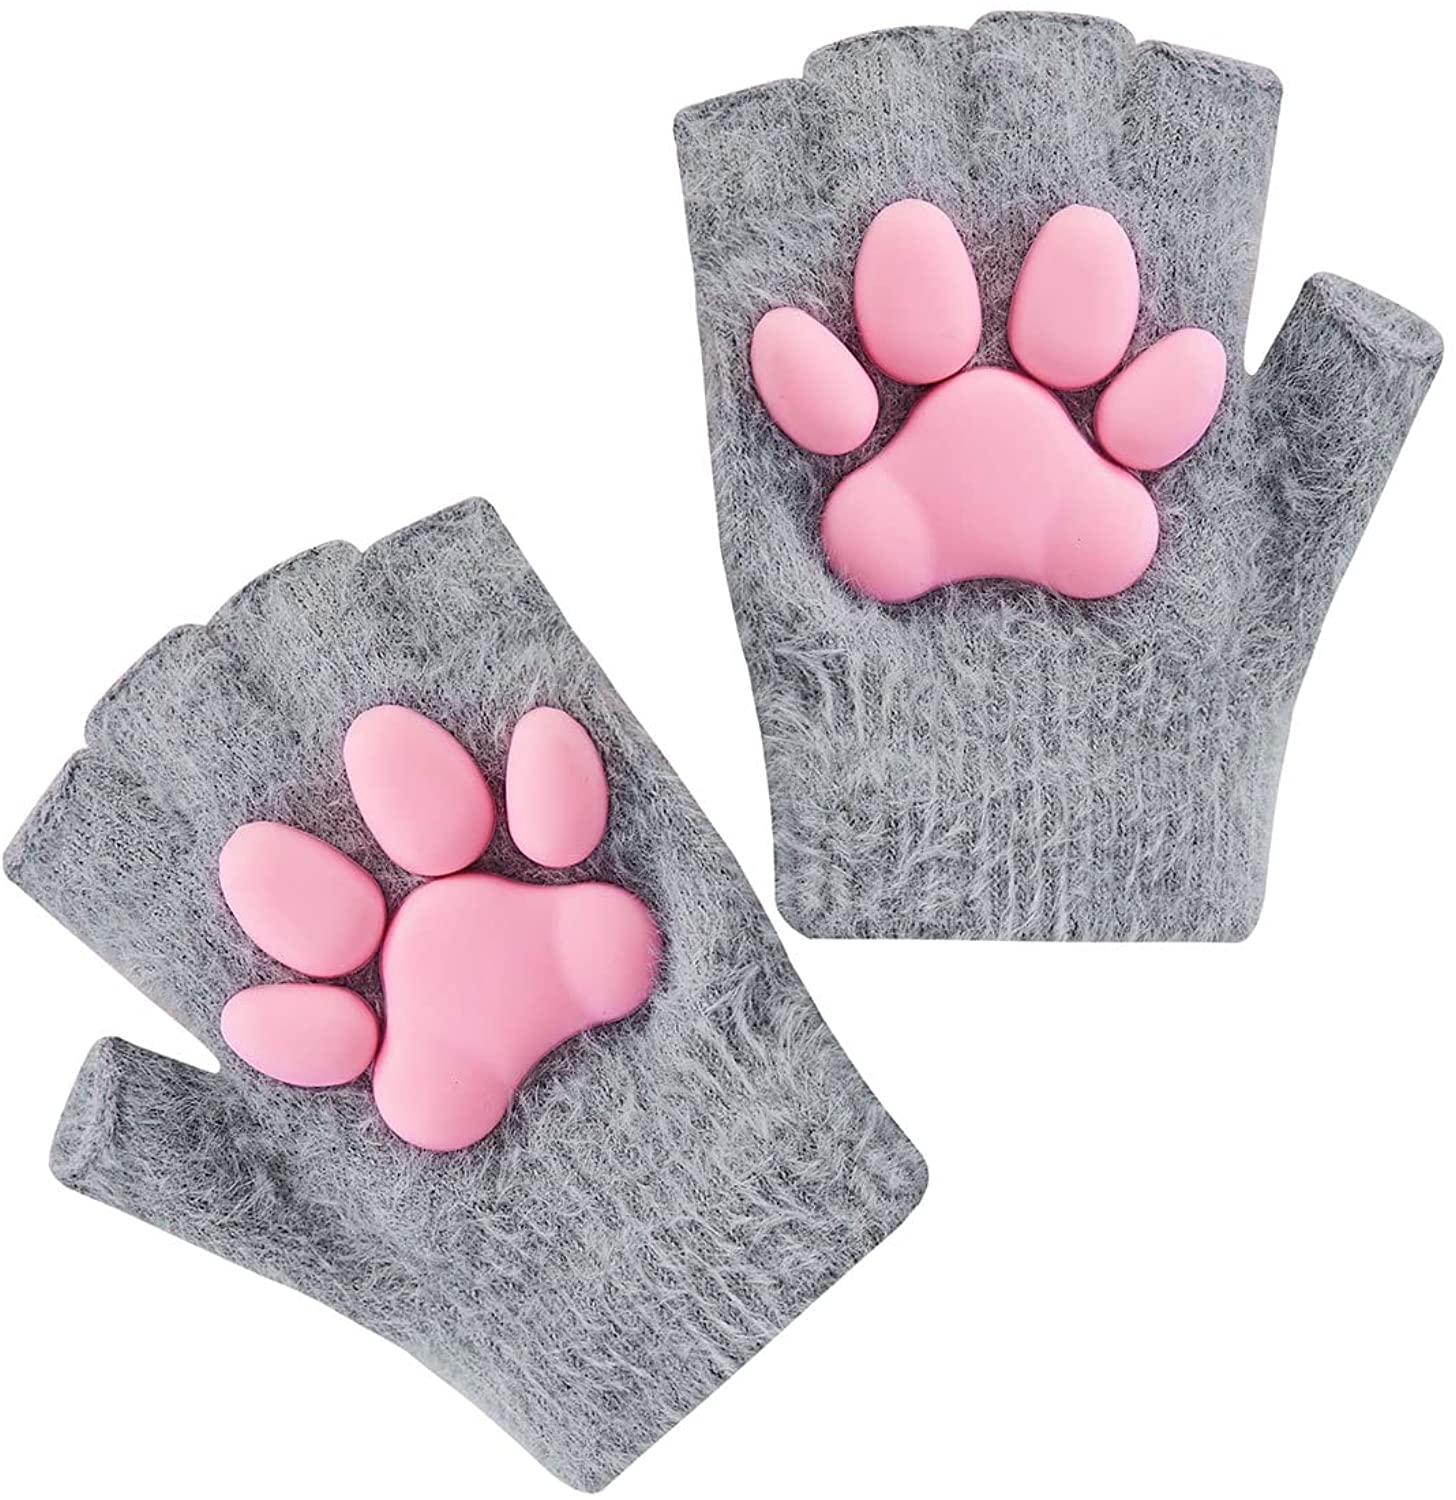 It's The Facet Of Excessive Cat Gloves Not Often Seen